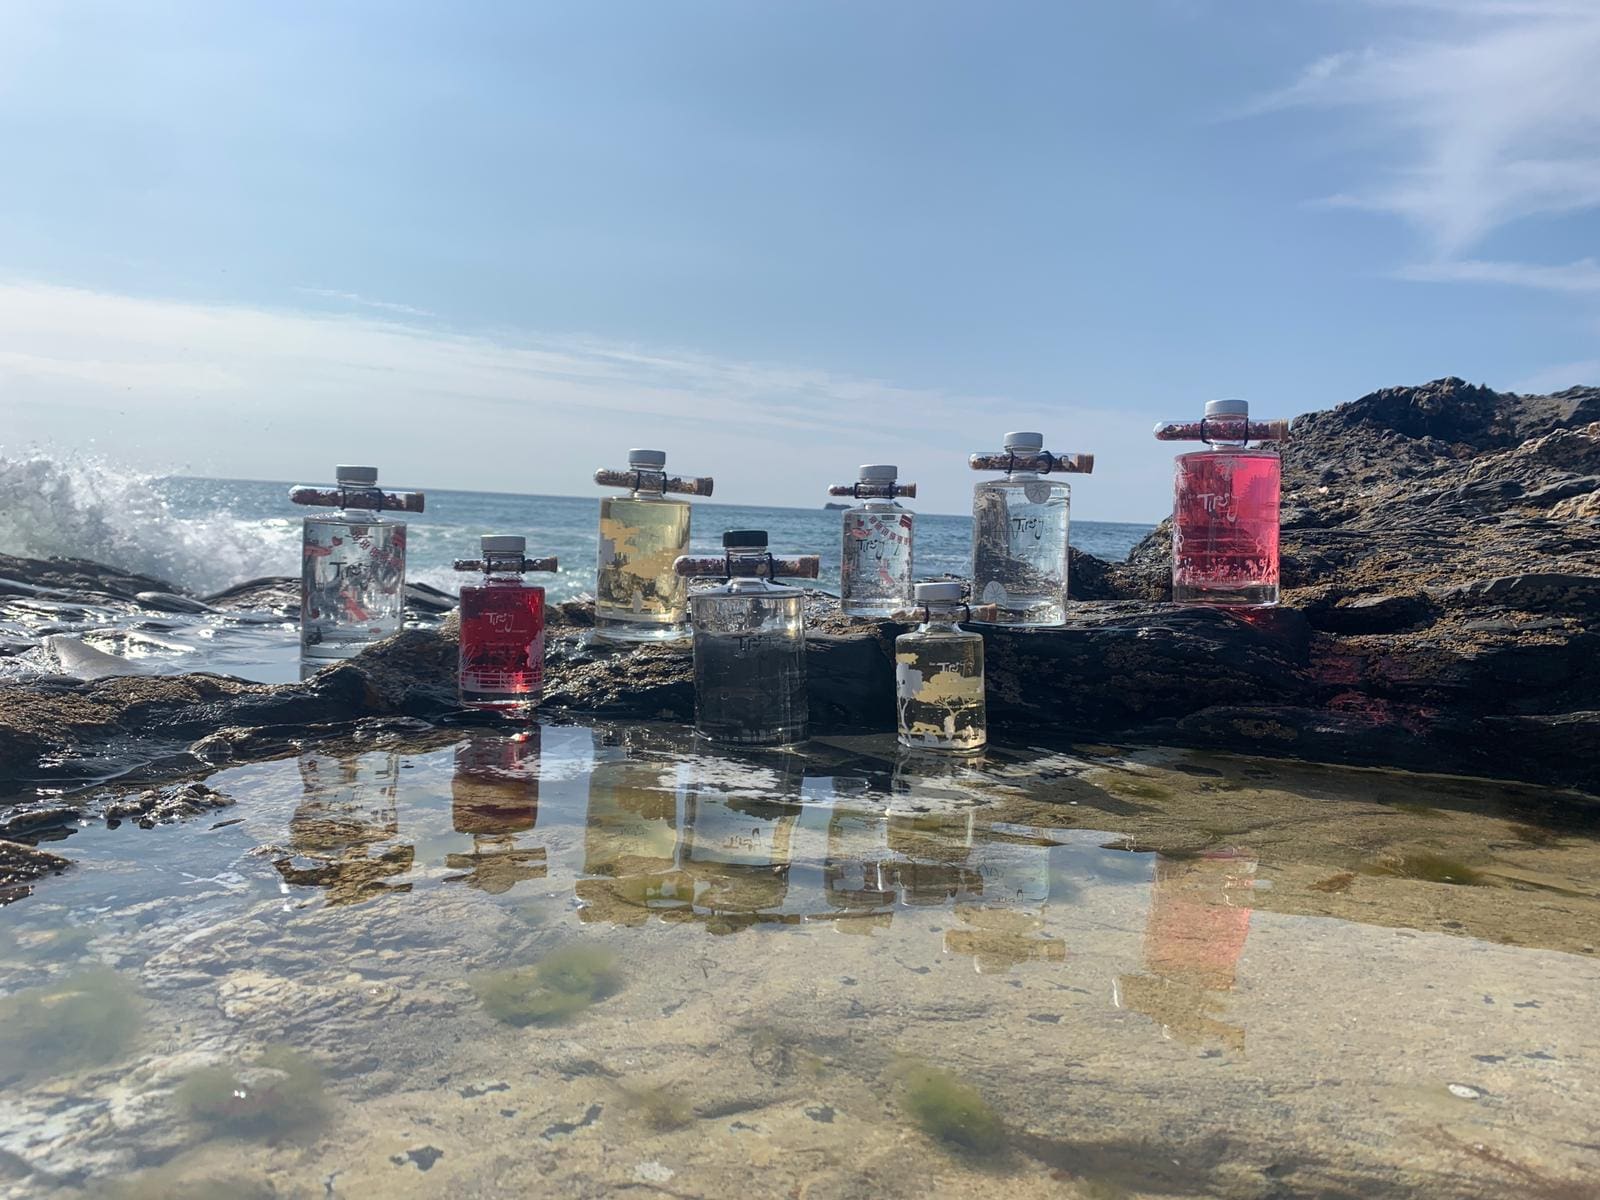 A group of bottles sitting on rocks near the ocean.